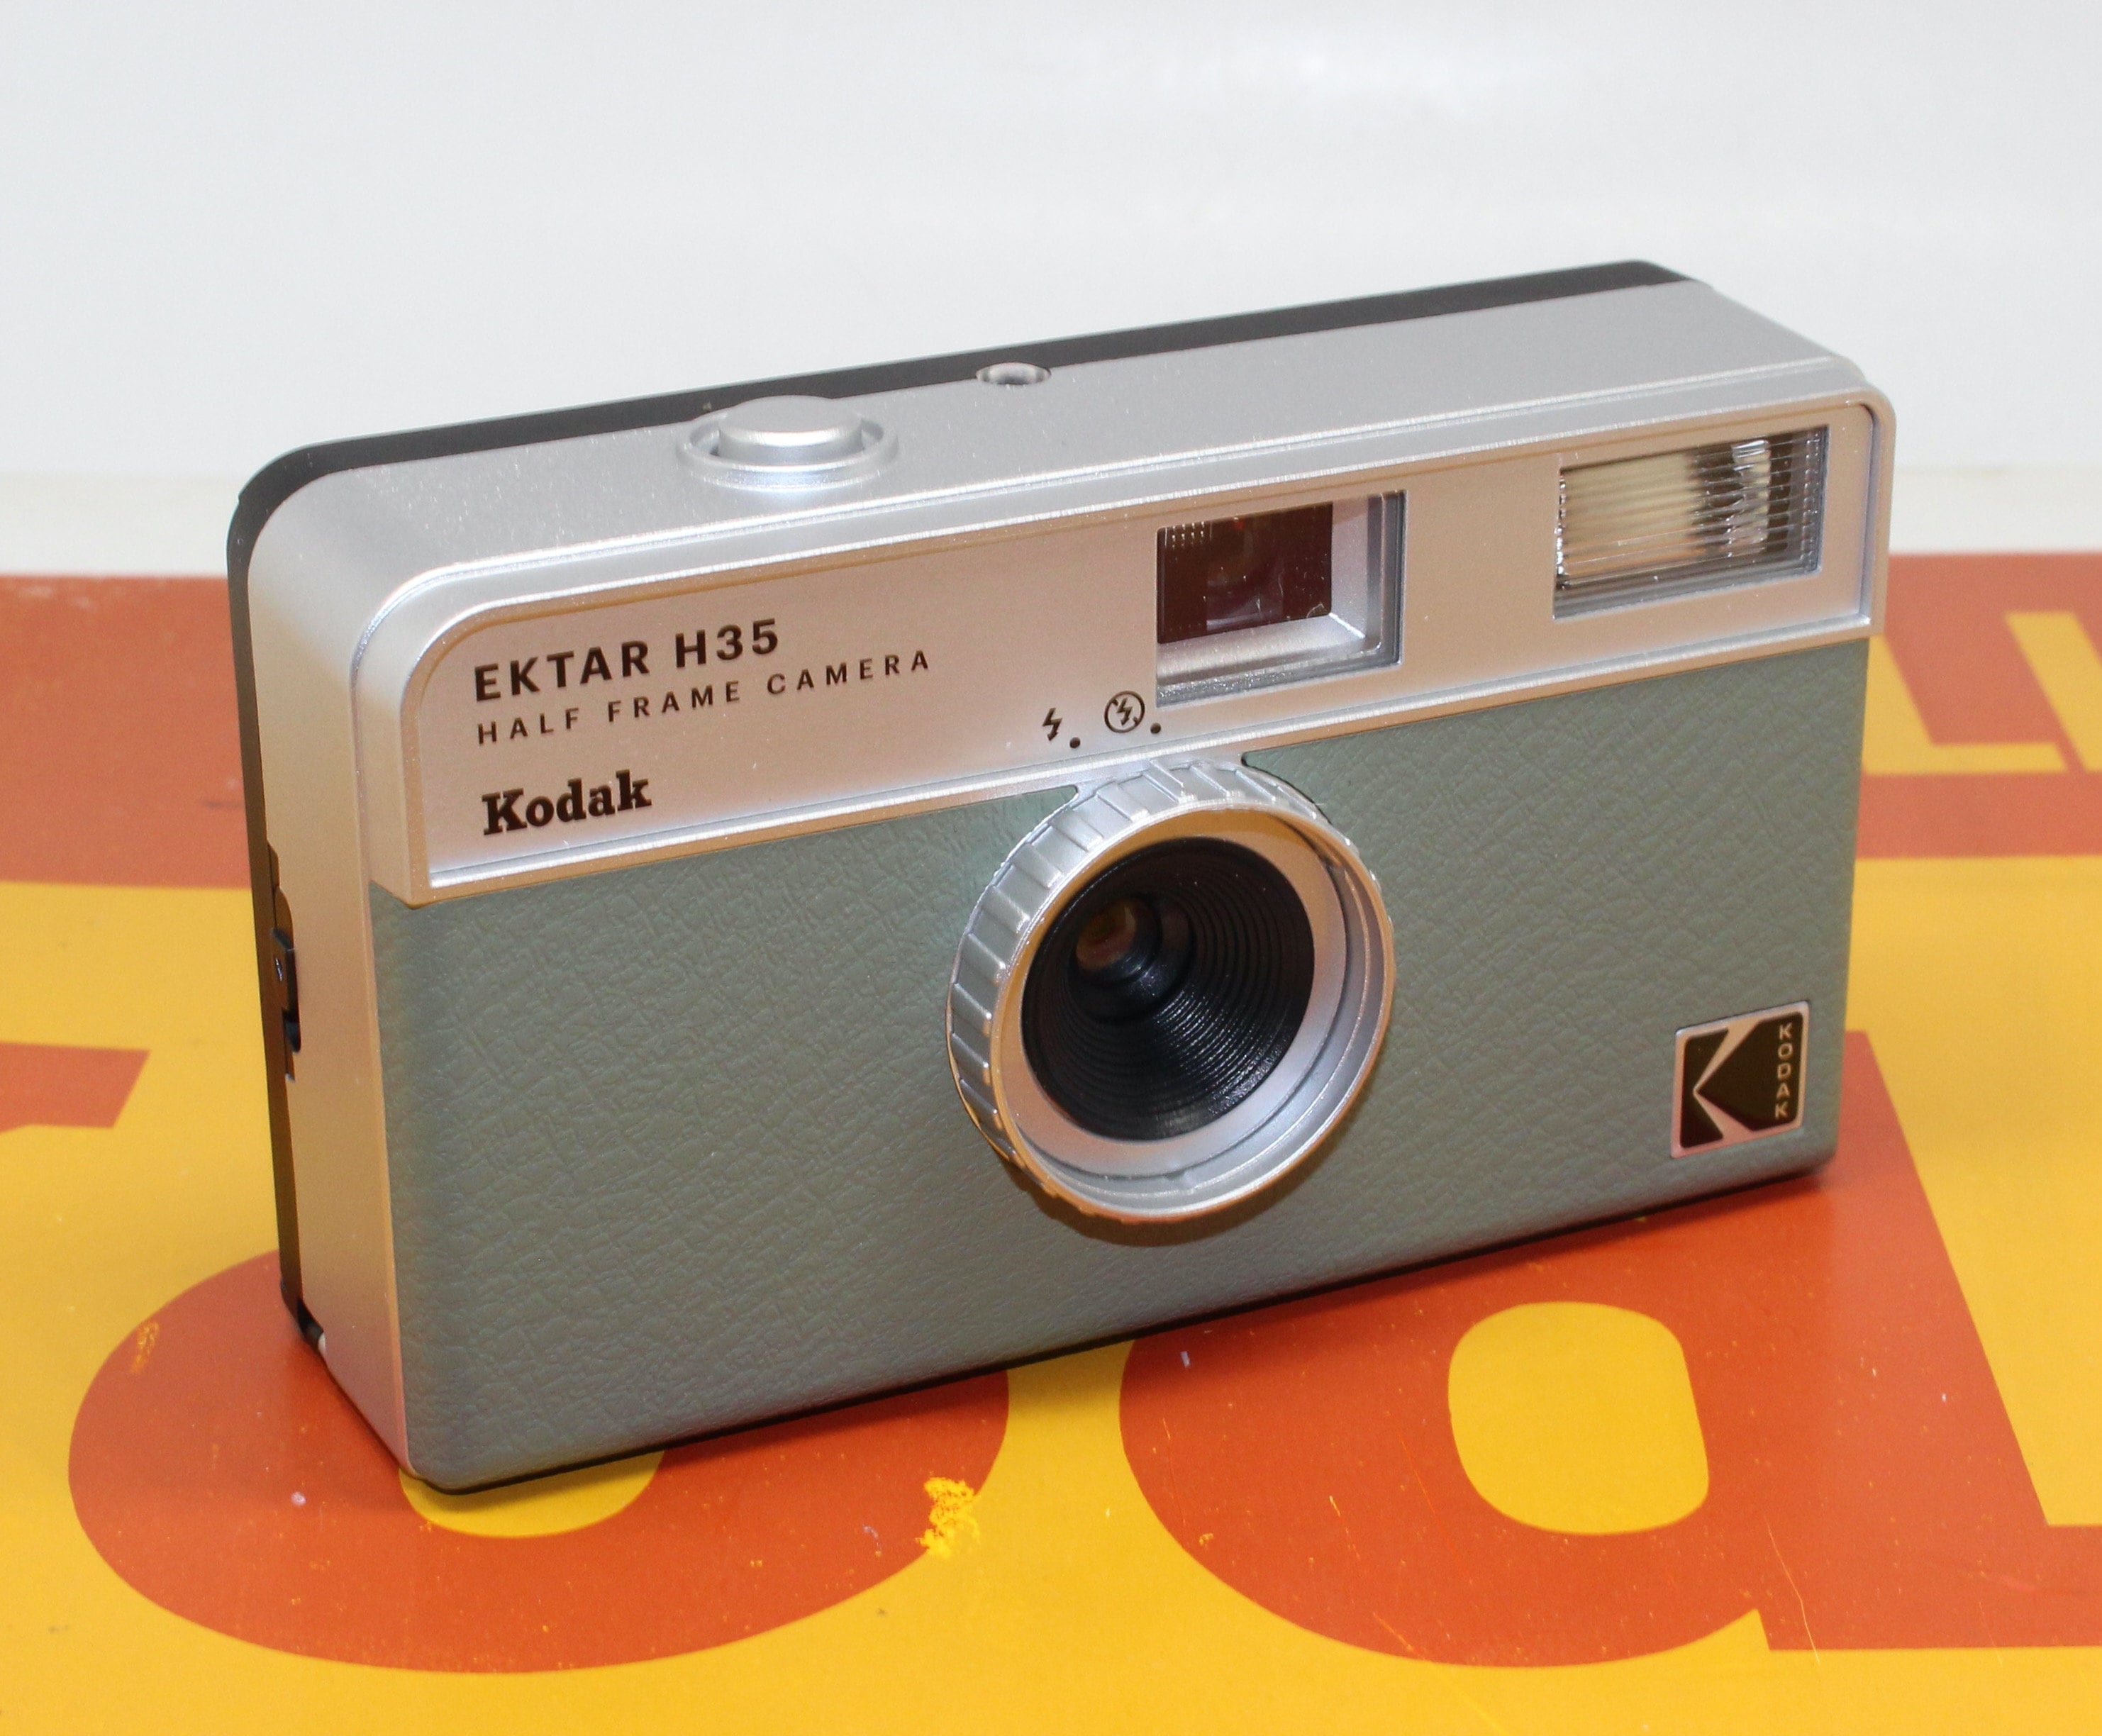 Kodak Ektar H35 Half Frame Camera / Portra 400 / First time using my new  toy camera! : r/toycameras